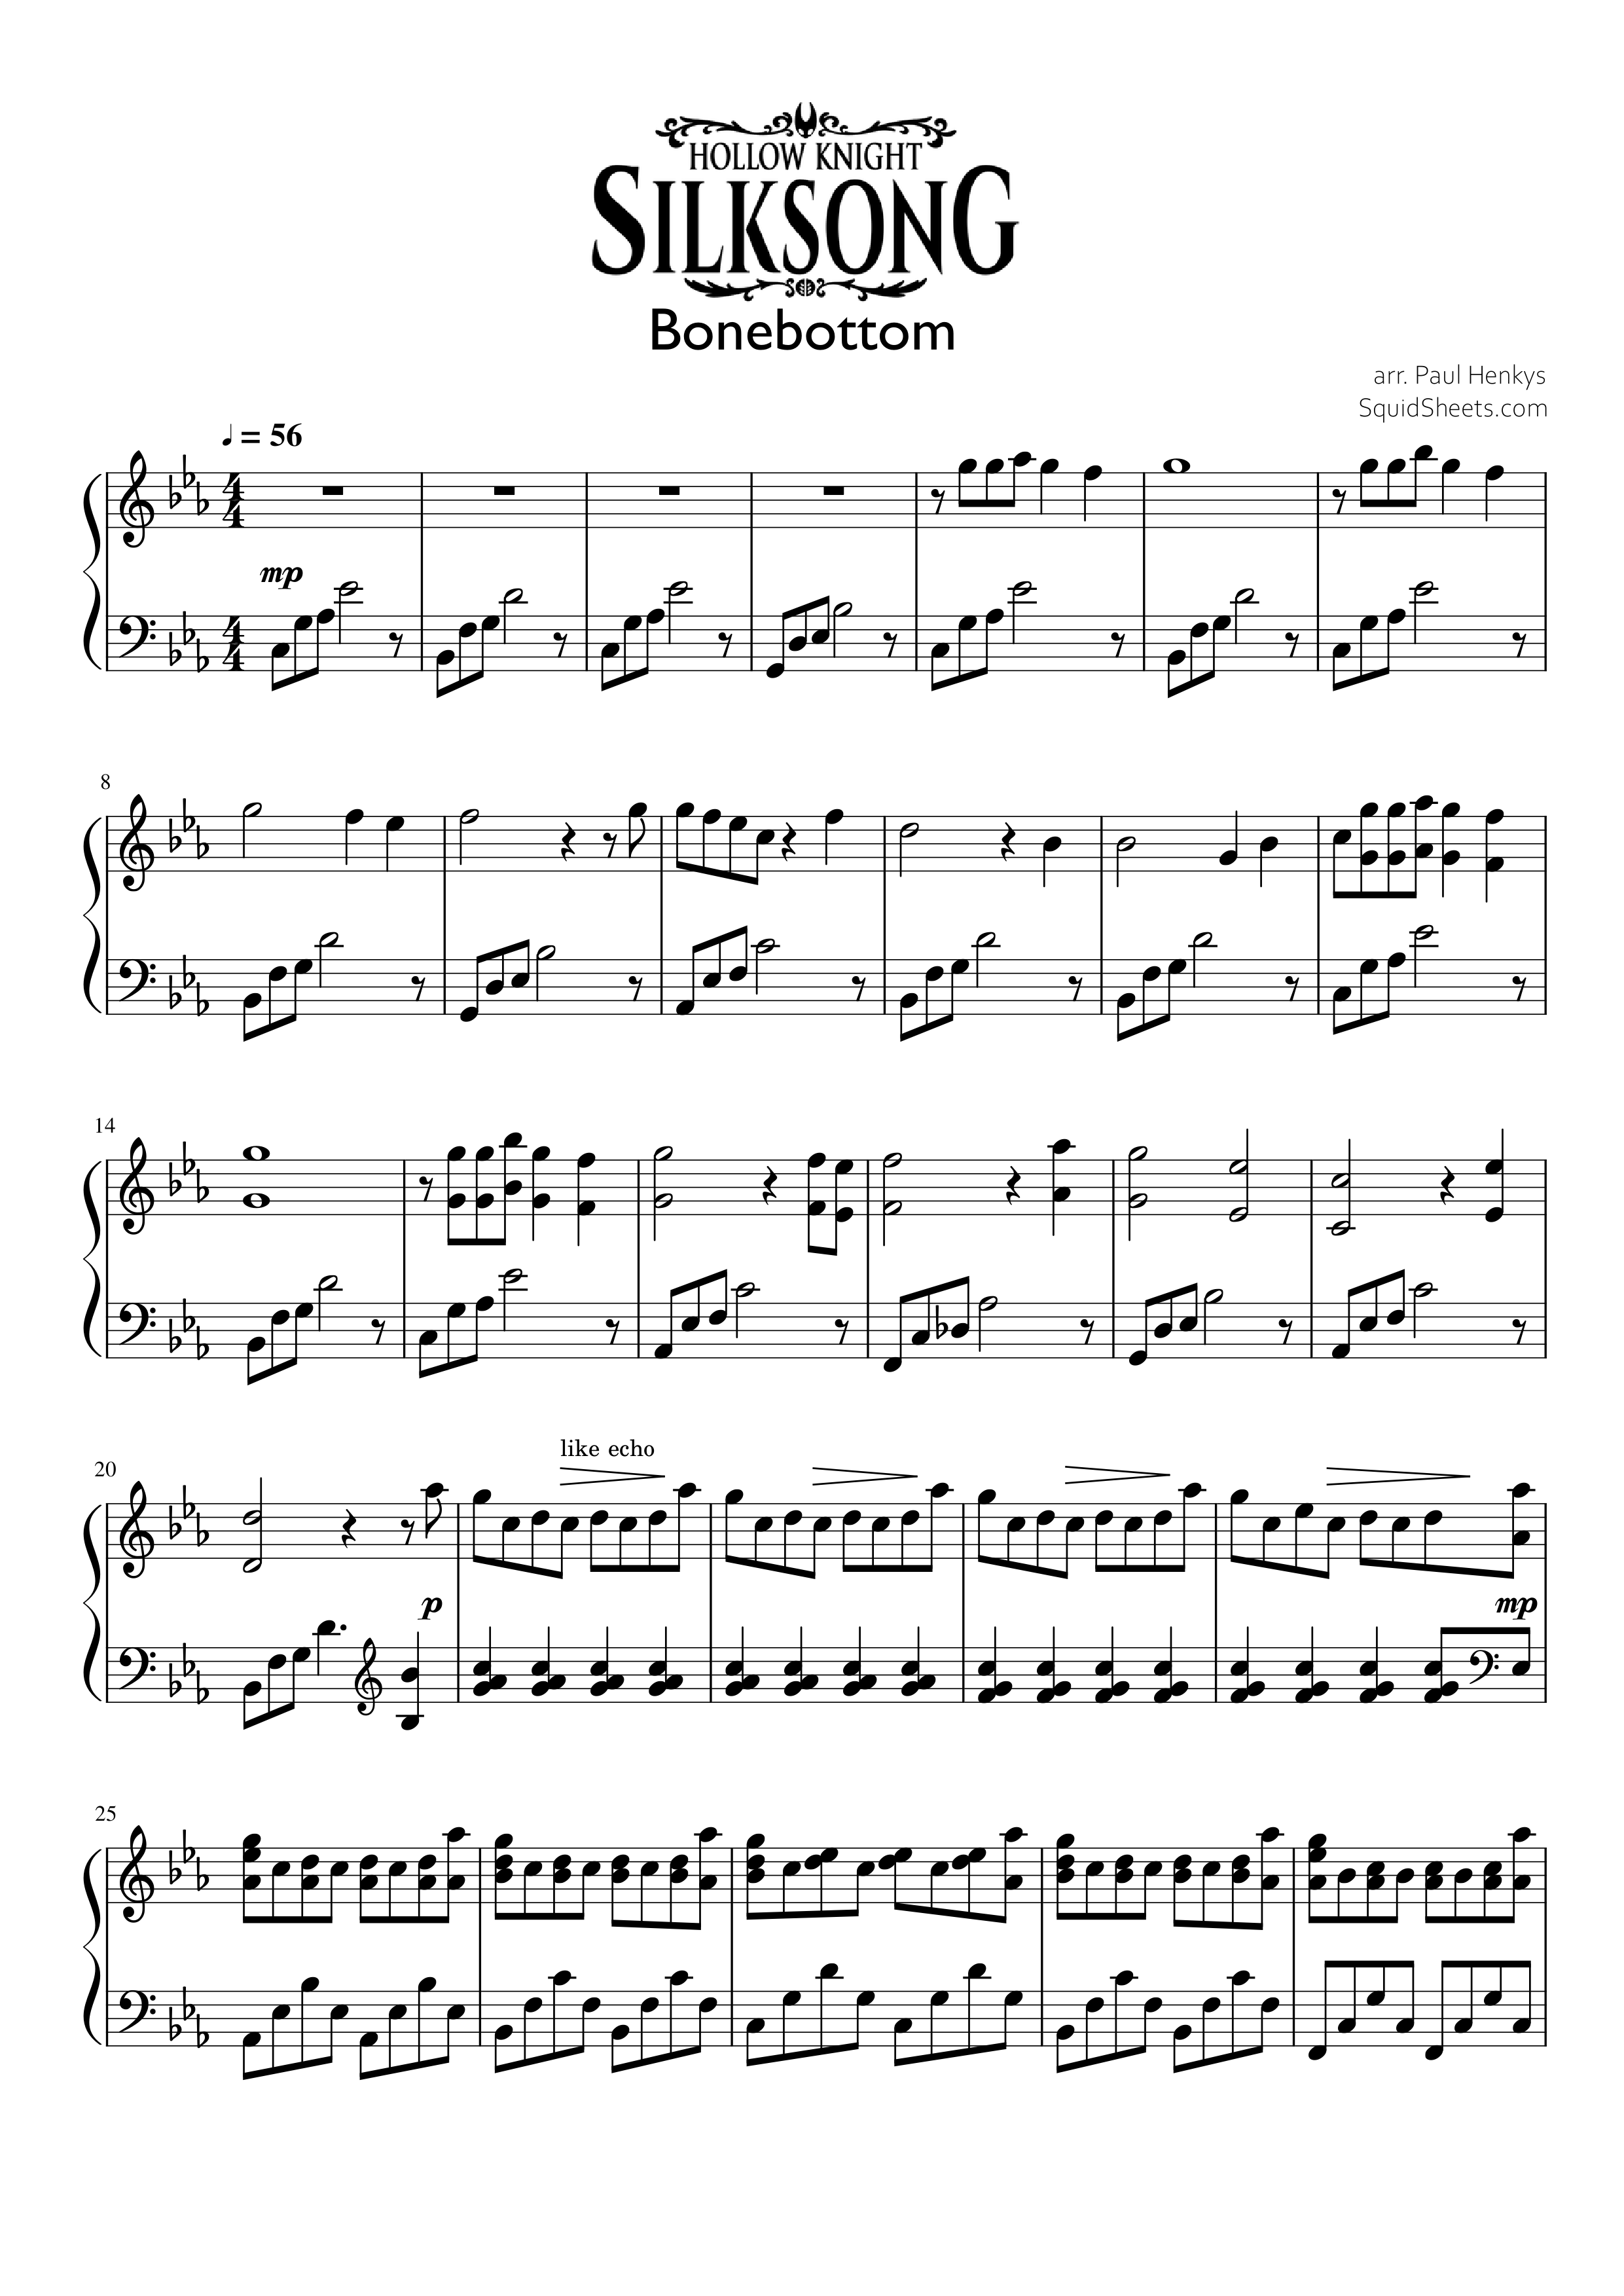 Hollow Knight: Silksong - Sheet Music - SquidSheets.com - Free Piano Music